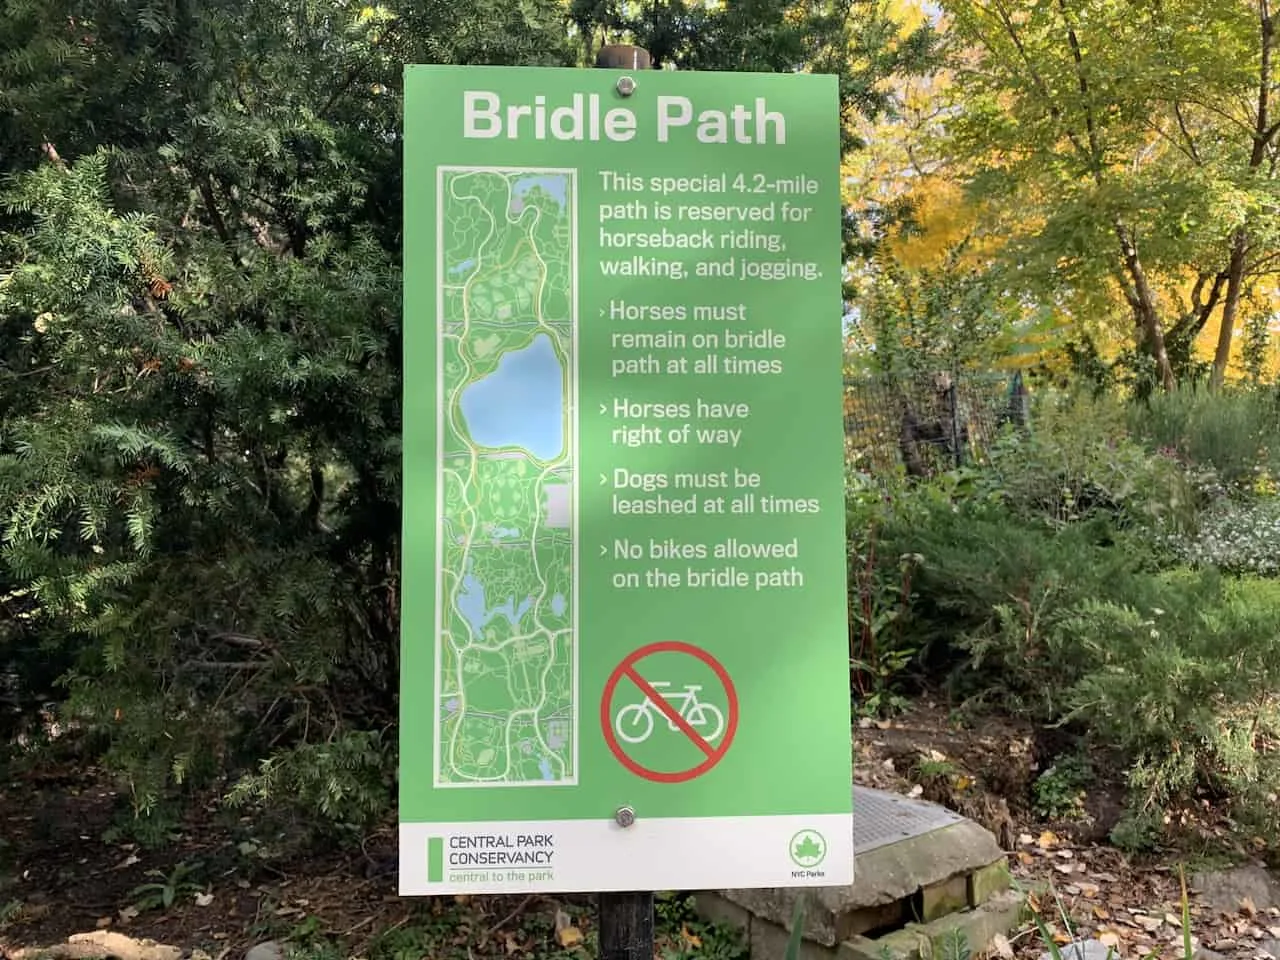 Bridle Path of Central Park